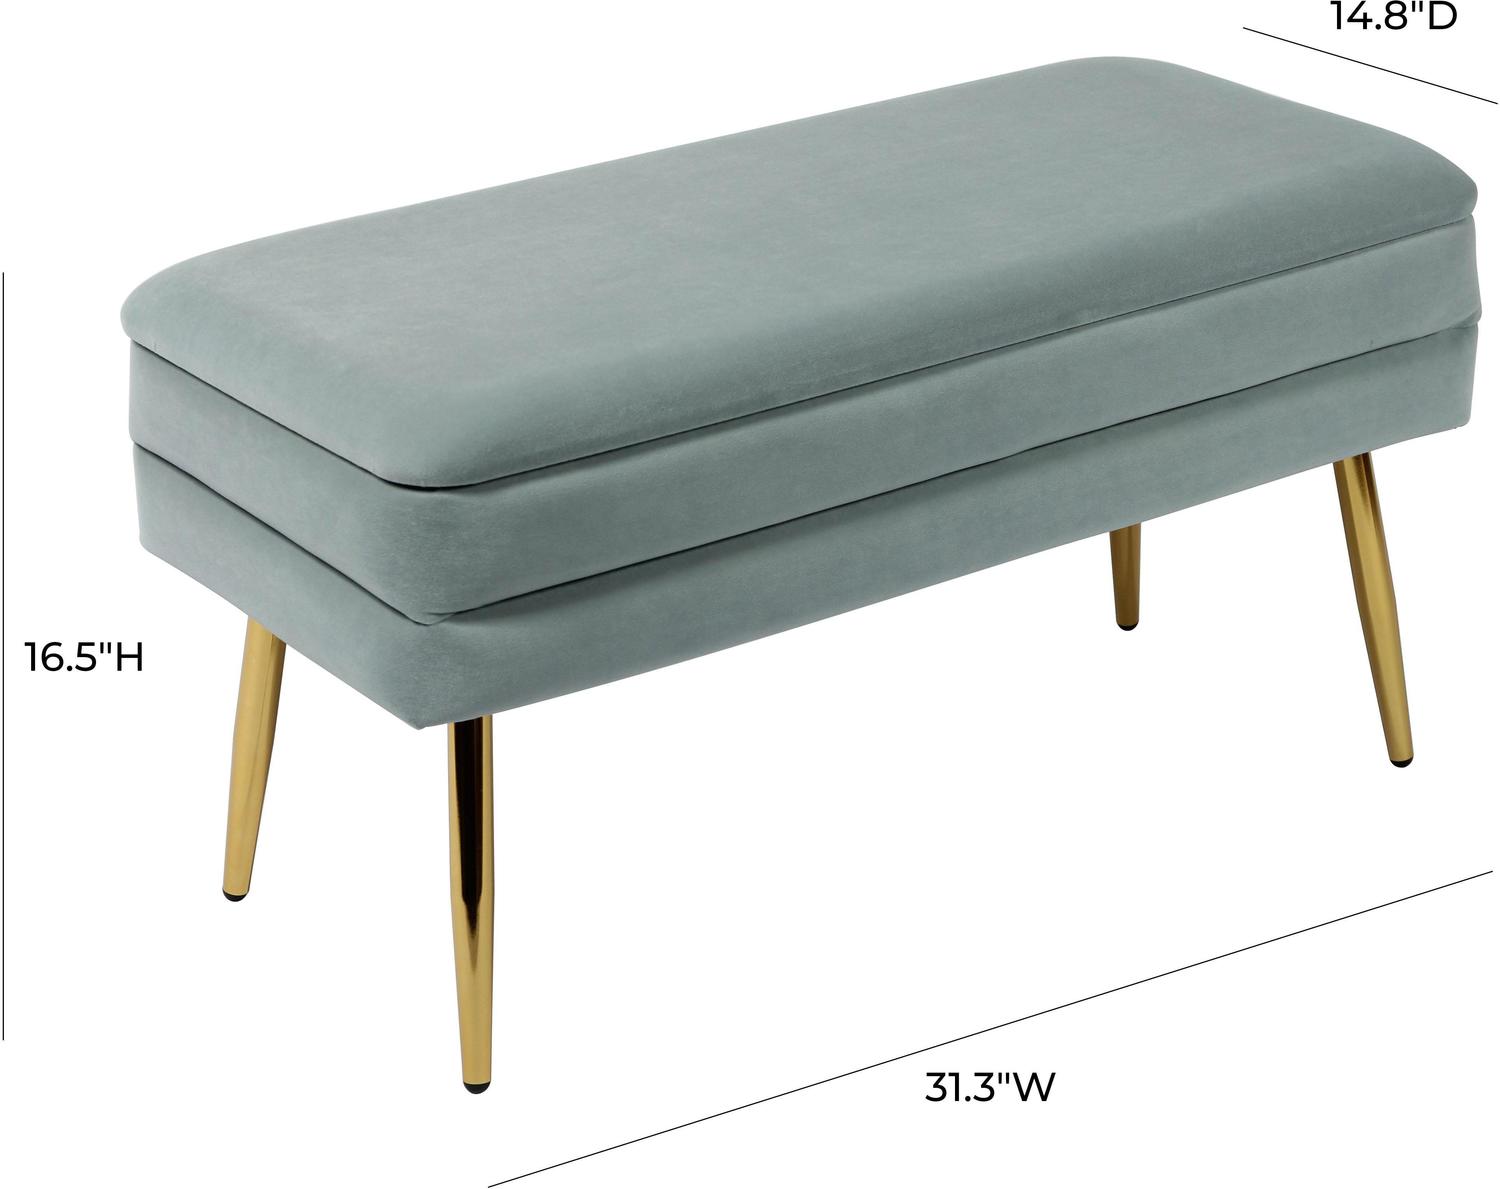 accent chair wicker Contemporary Design Furniture Benches Sea Blue